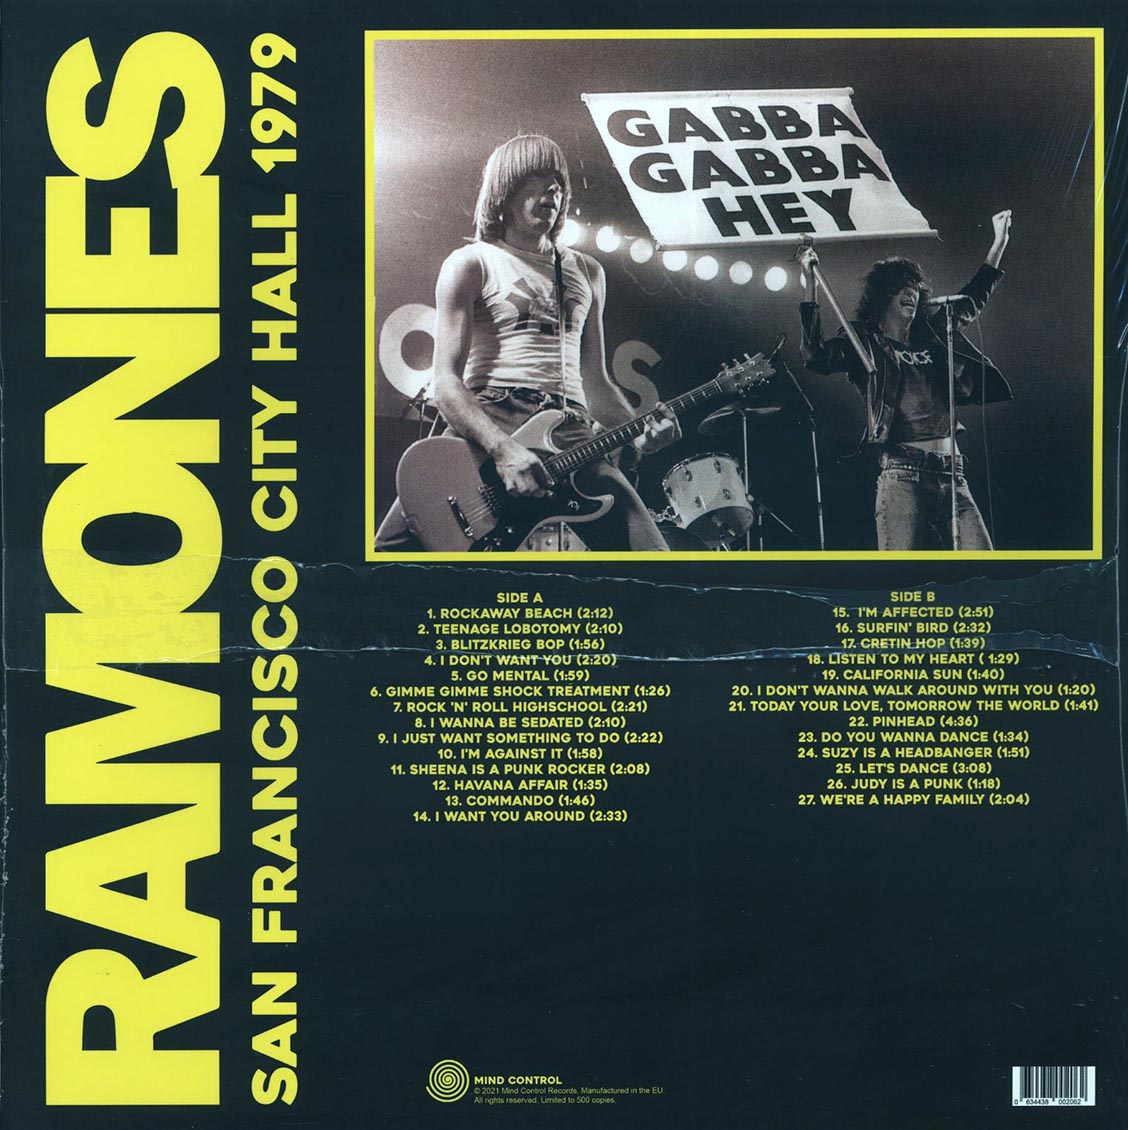 The Ramones - San Francisco City Hall 1979: FM Broadcast (ltd. 500 copies made) - Vinyl LP, LP